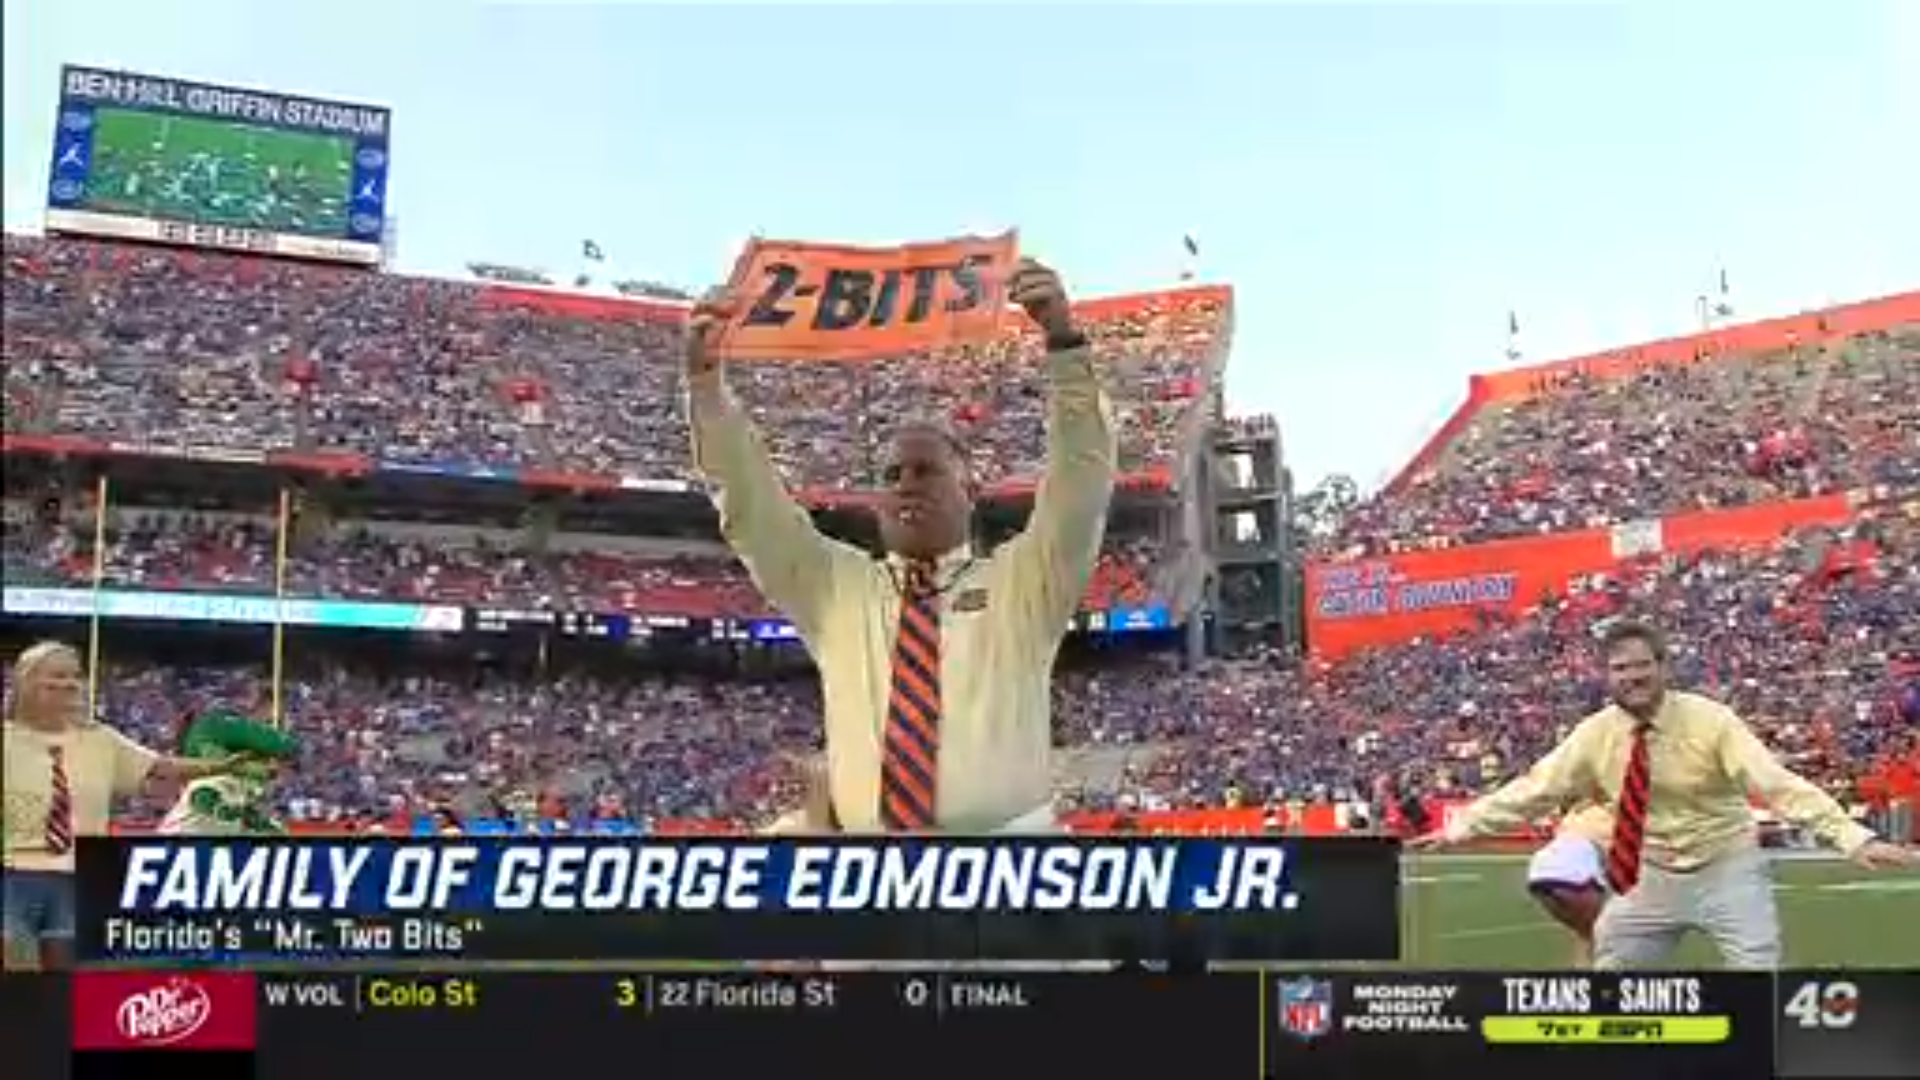 Honoring “Mr. Two Bits”, George Edmondson Jr.